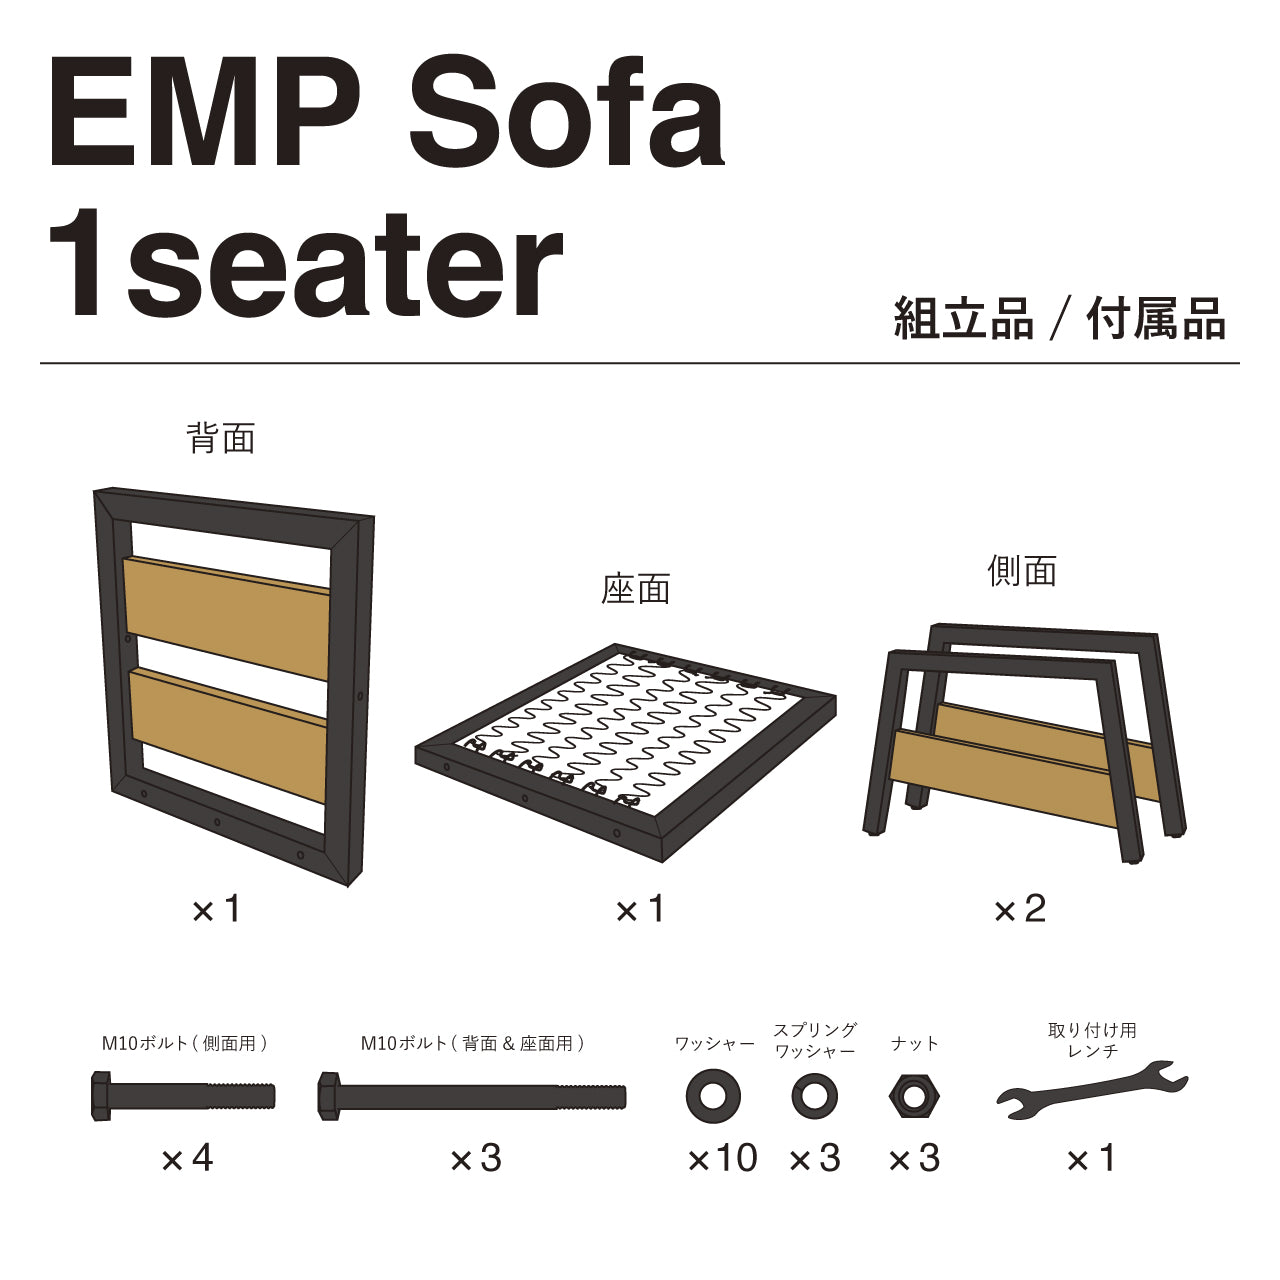 EMP Sofa 1Seater